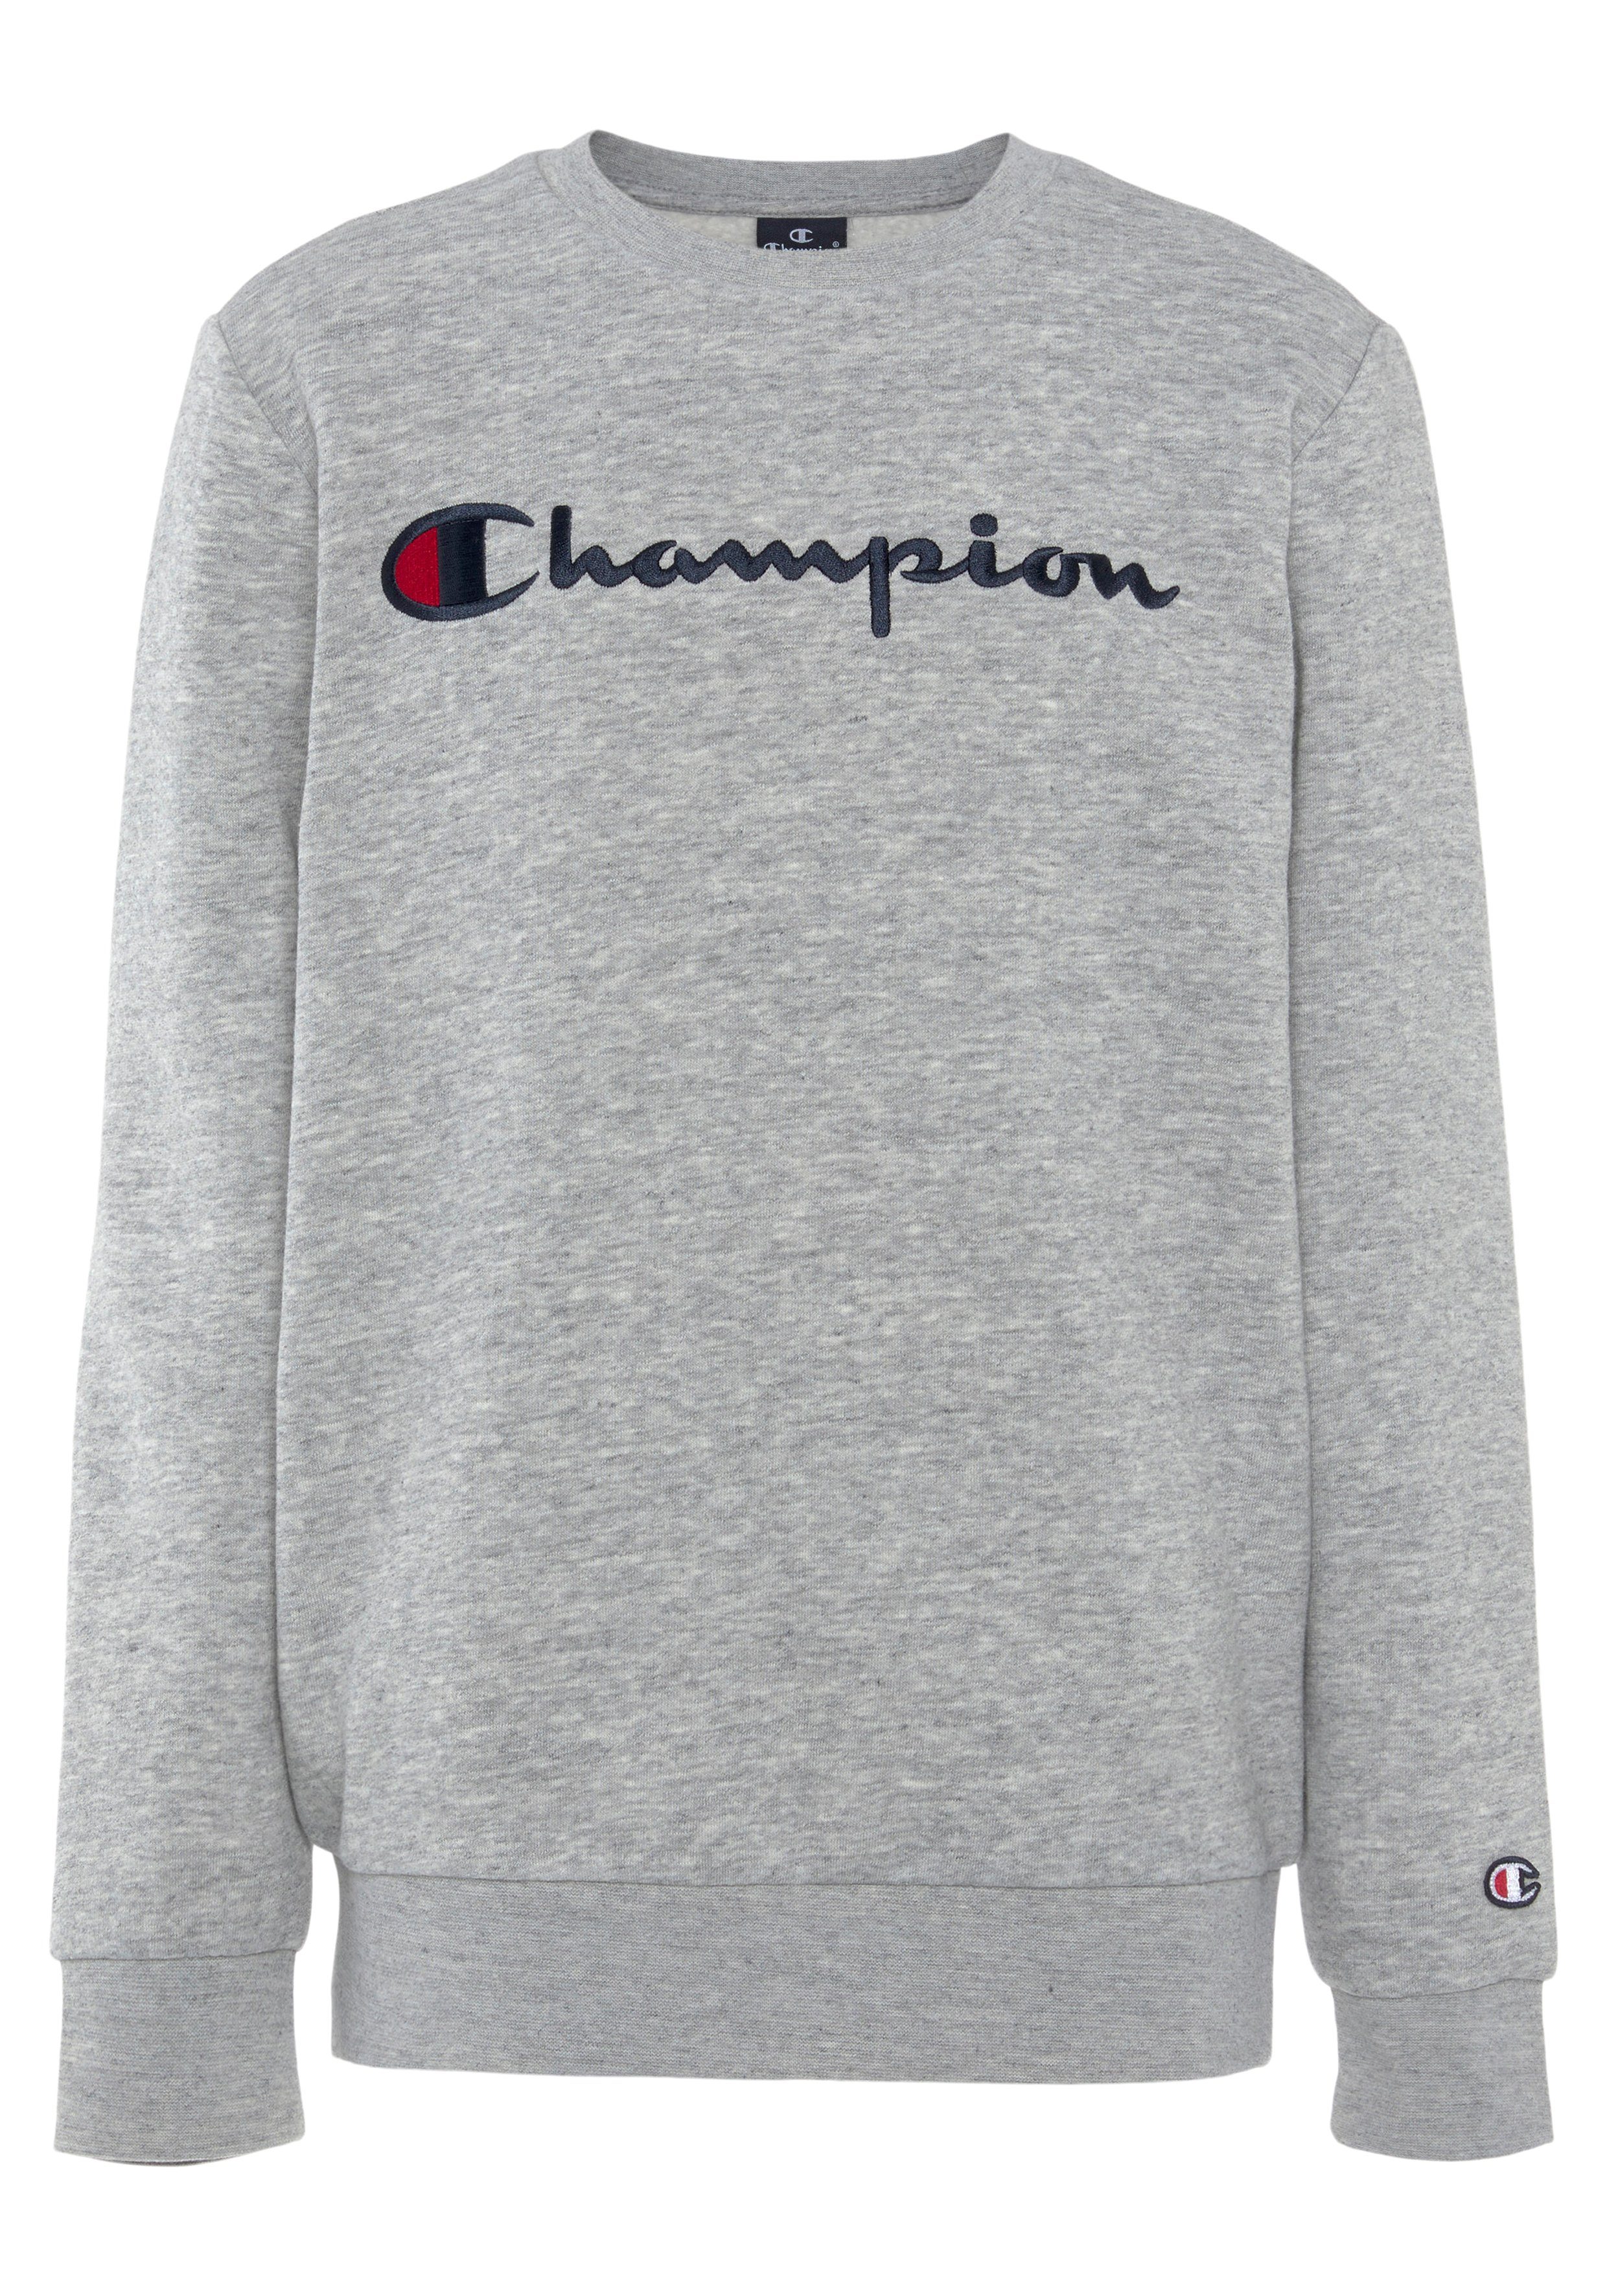 Champion Sweatshirt Classic Crewneck Sweatshirt large Logo - für Kinder hellgrau mel | Sweatshirts